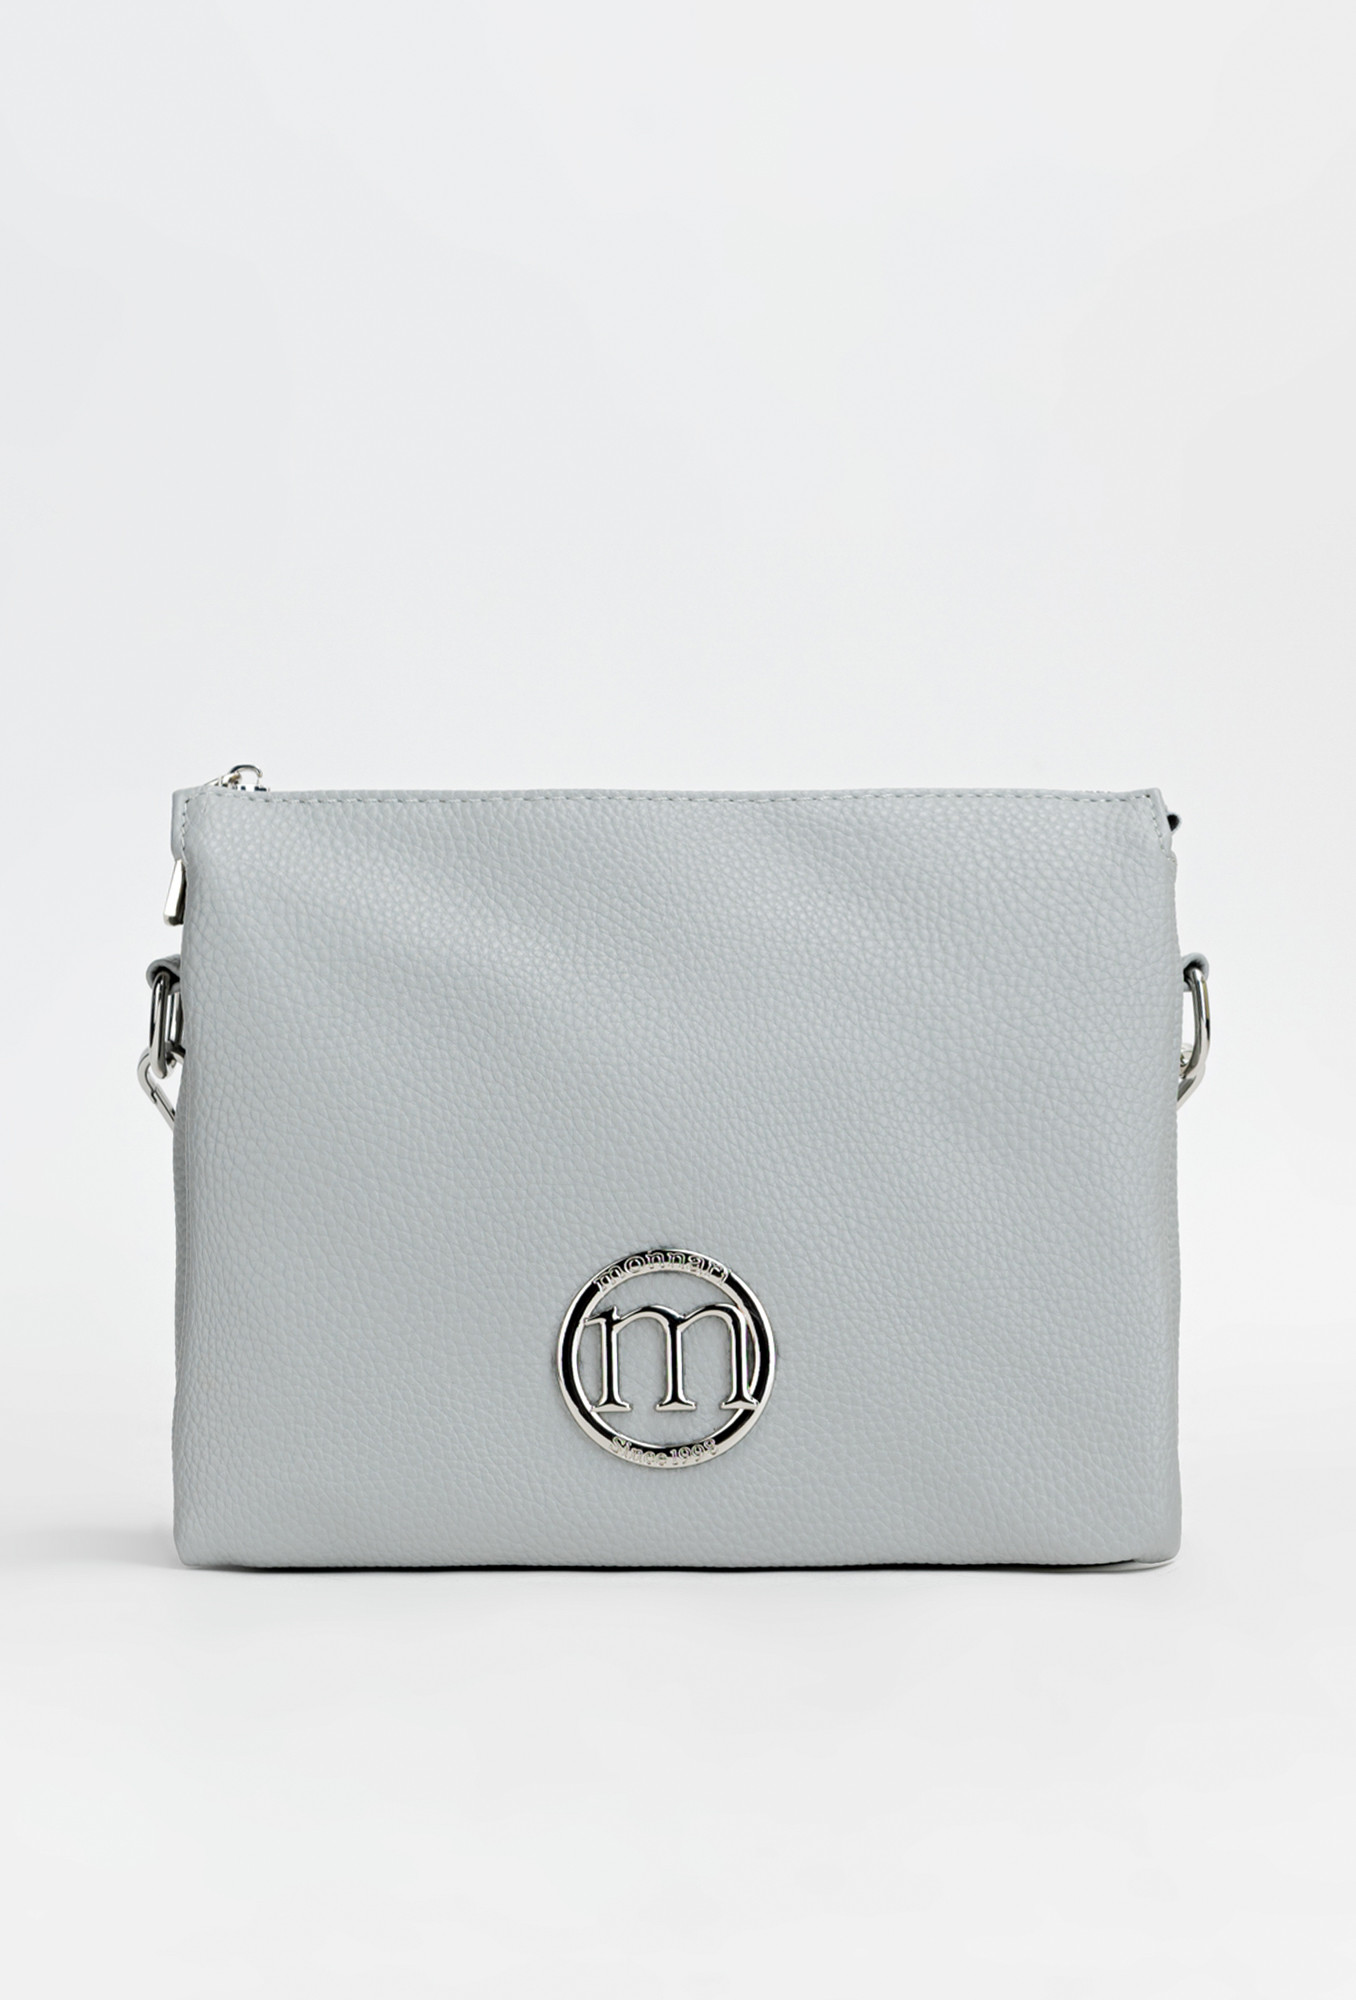 Monnari Bags Dámská kabelka s logem značky Monnari Grey OS